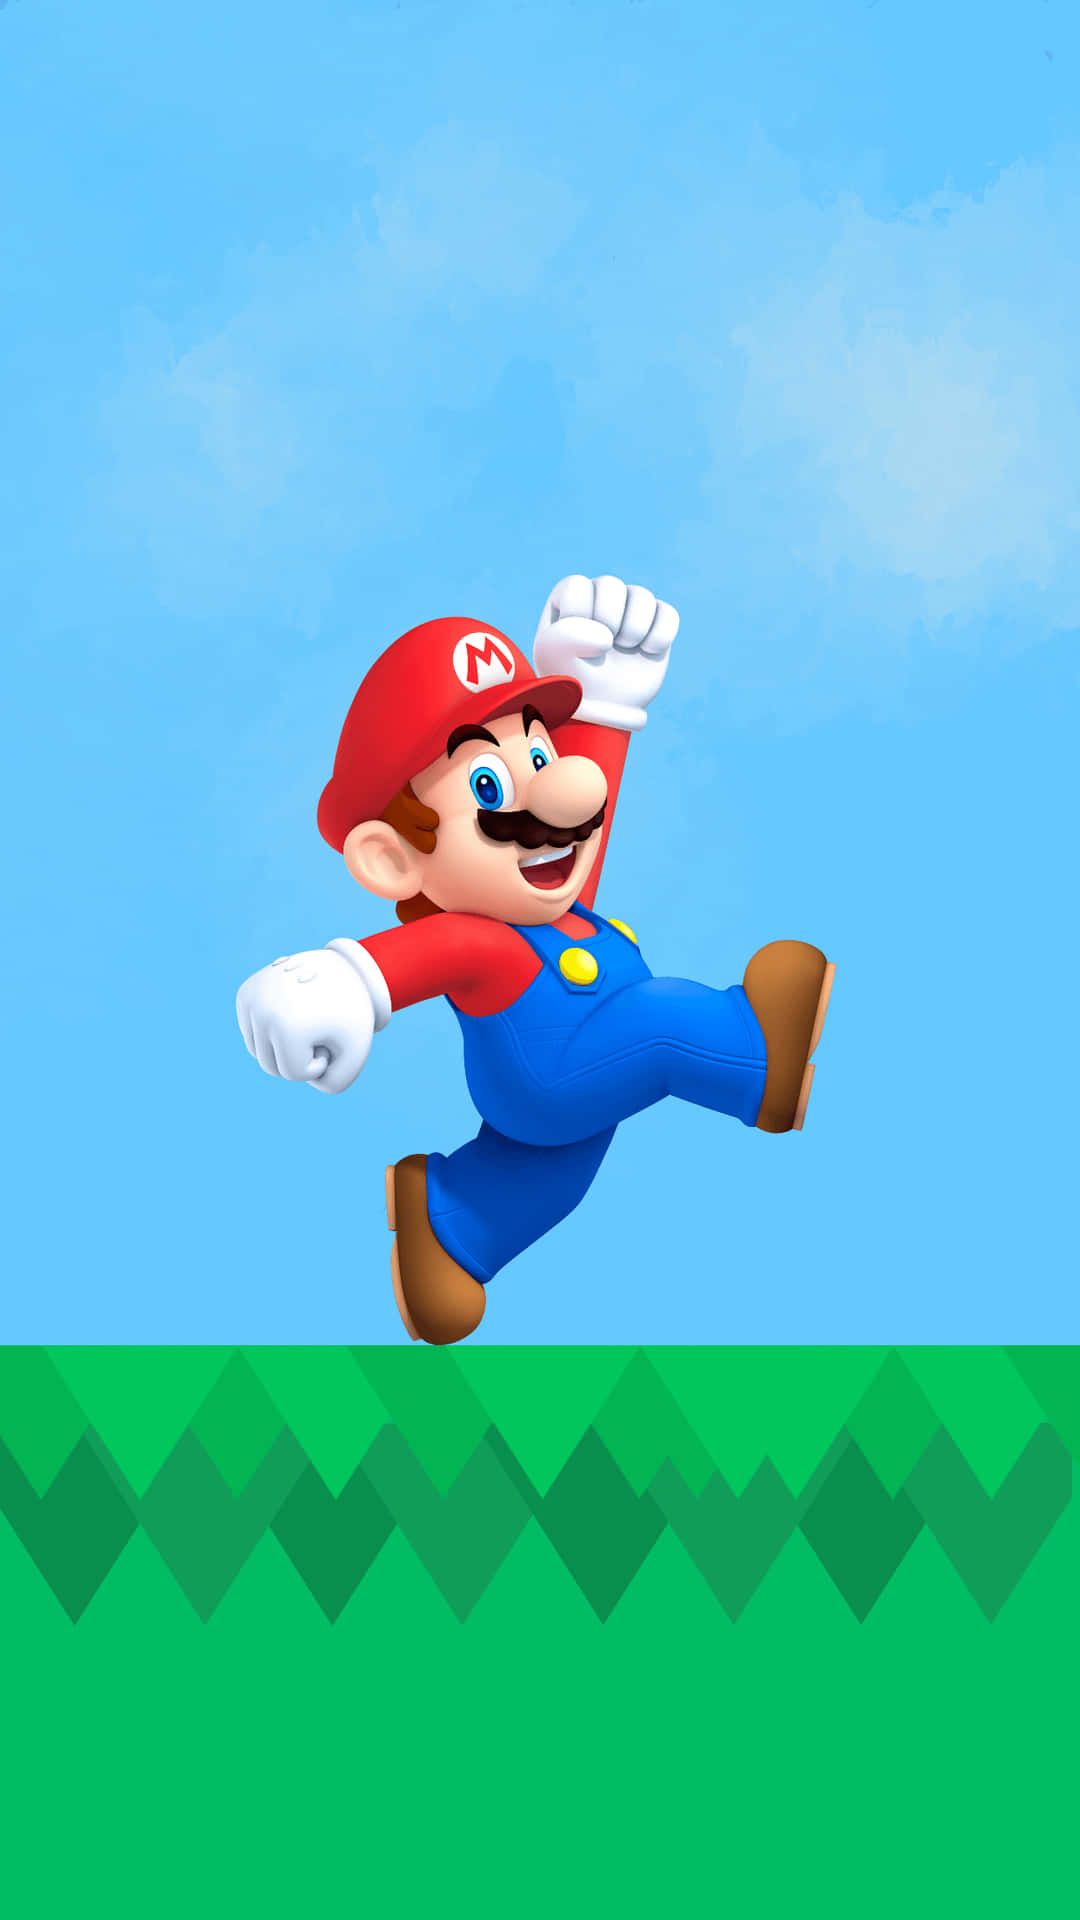 Free Super Mario iPhone Wallpaper Downloads, Super Mario iPhone Wallpaper for FREE